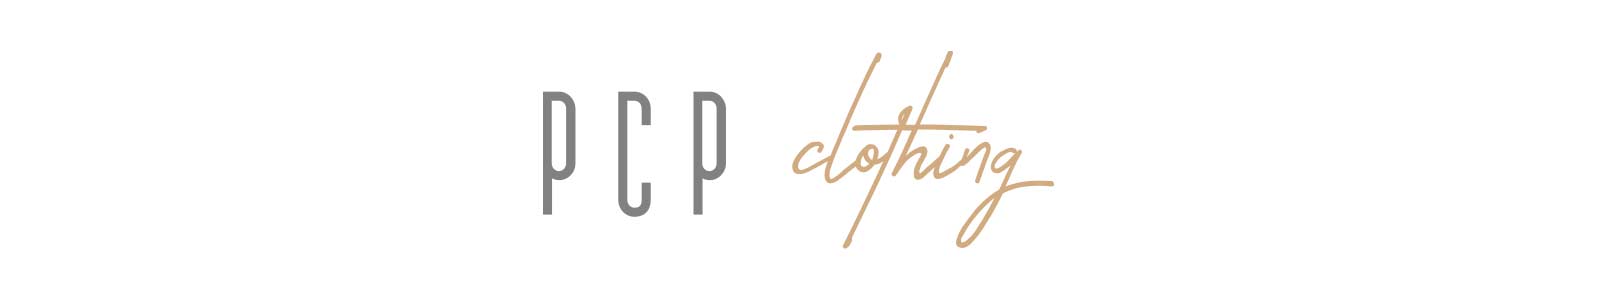 PCP Clothing